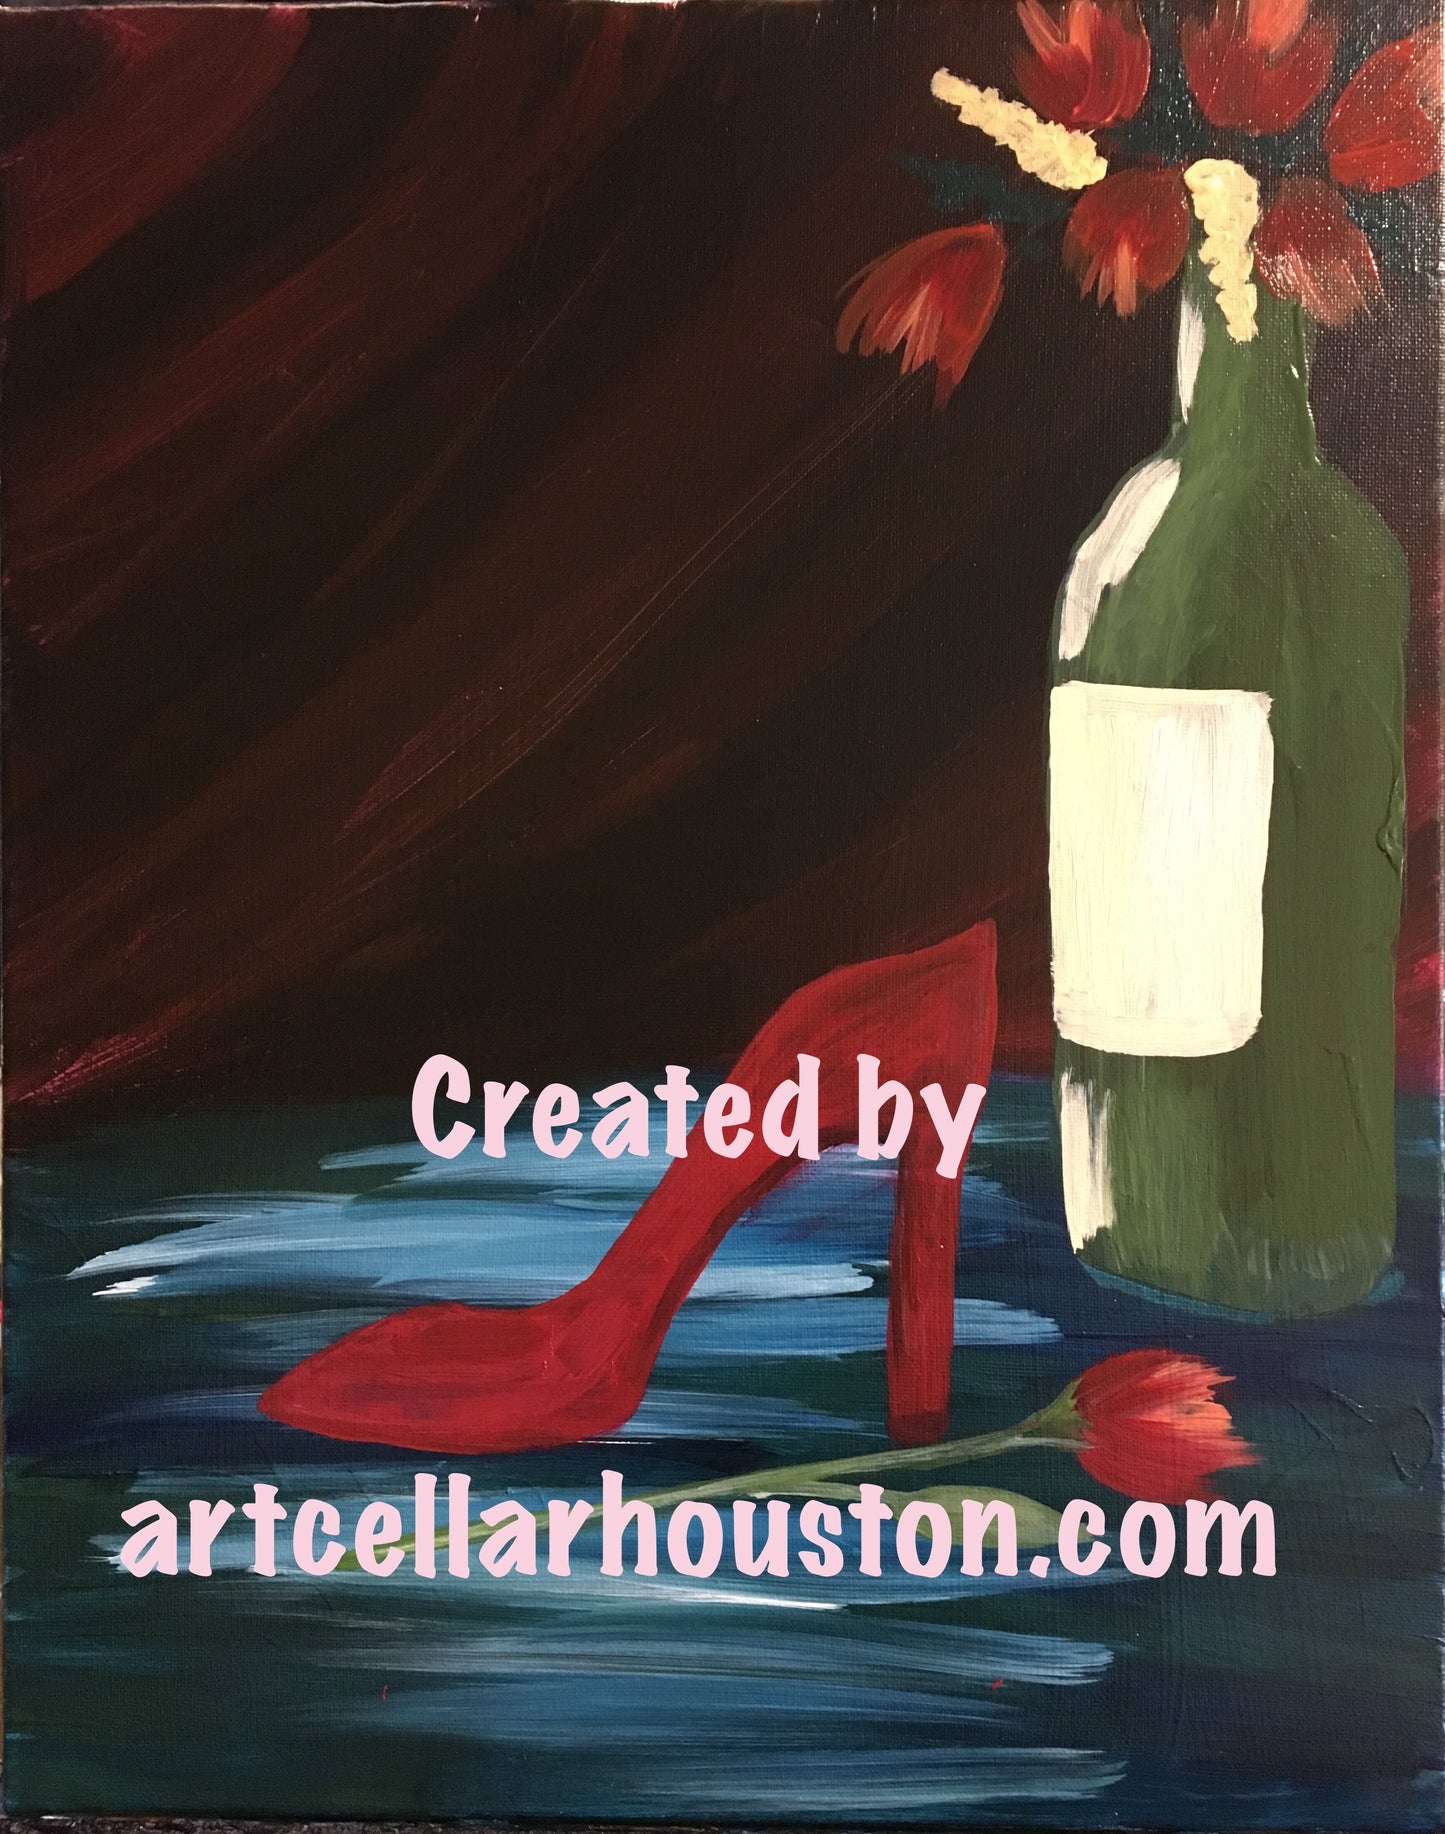 Thu, Jan 20, 630-9P “Wine & Heels” Public Houston Wine & Painting Class